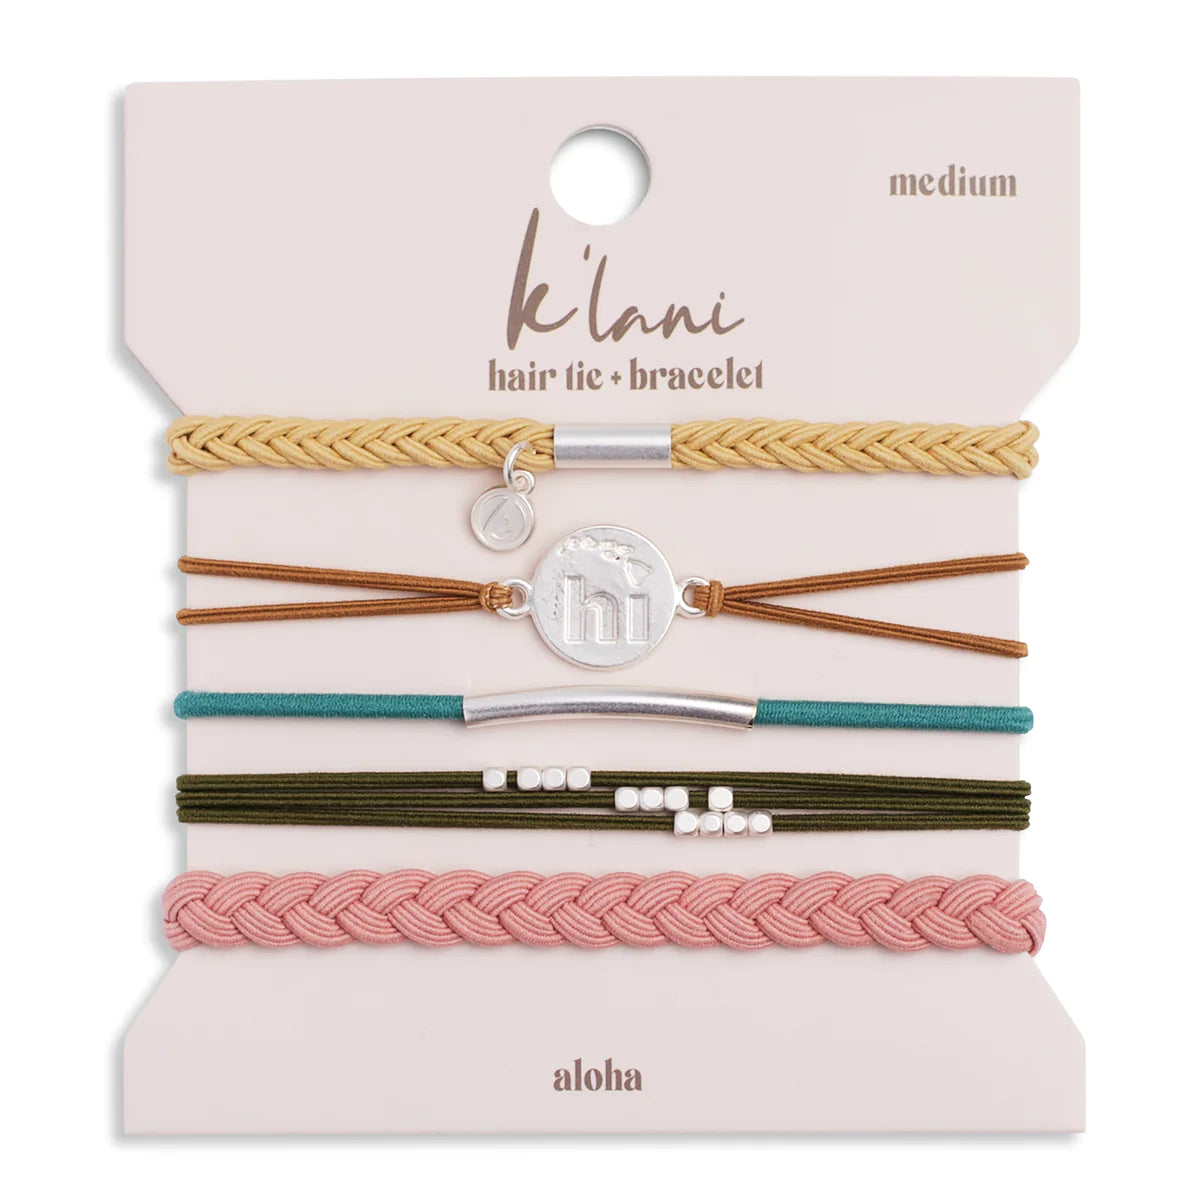 K'lani Hair Tie Bracelet - Aloha